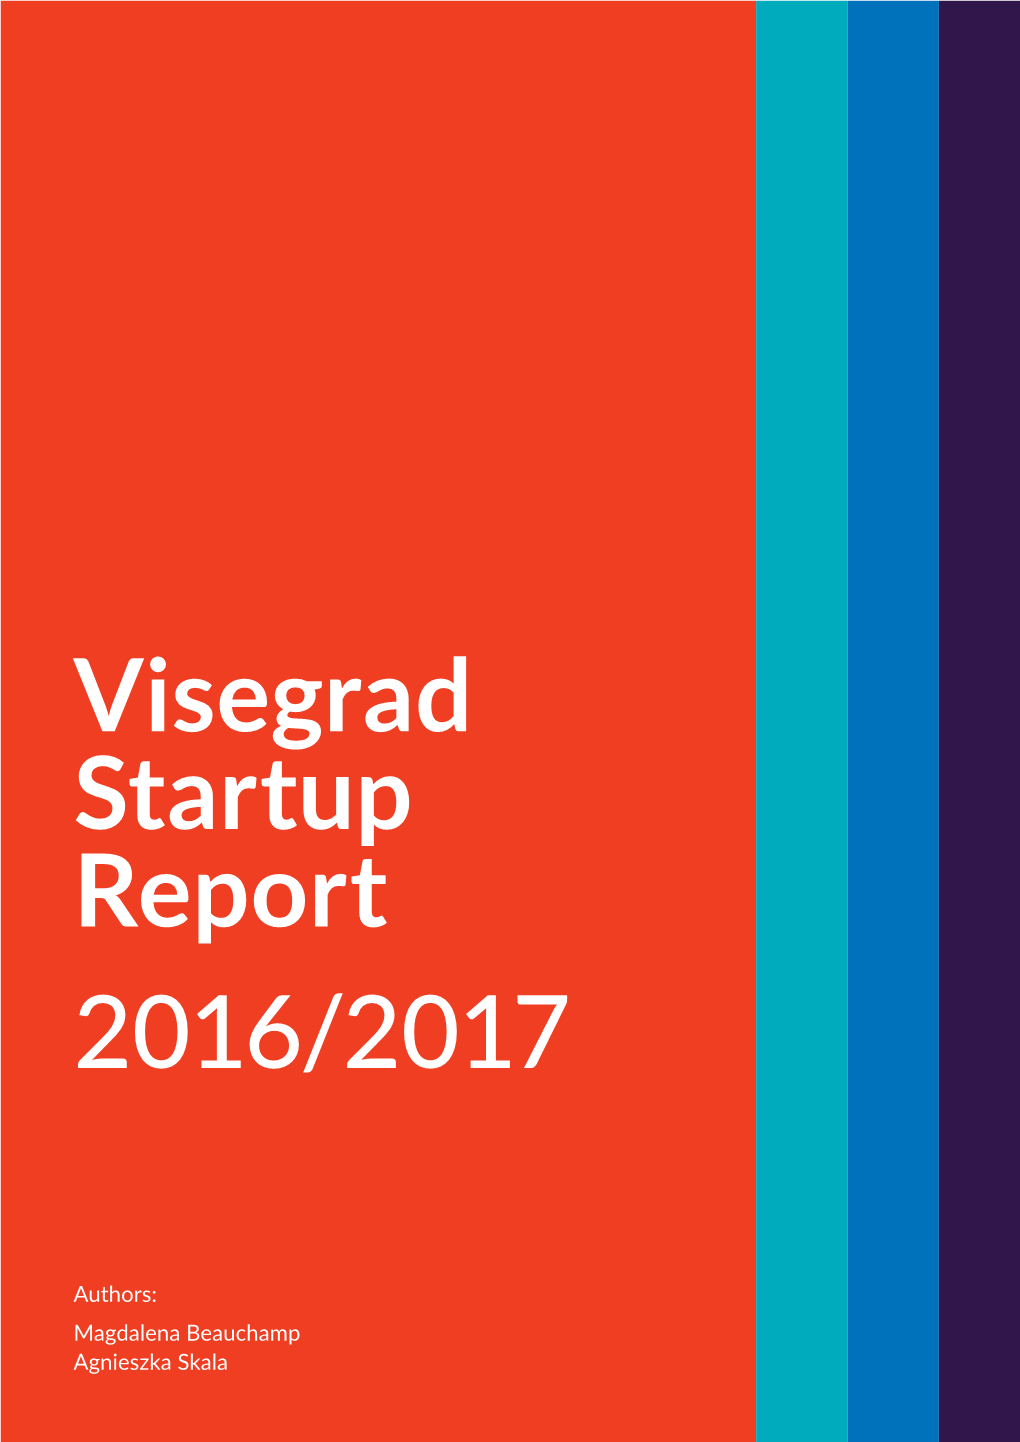 Visegrad Startup Report 2016/2017